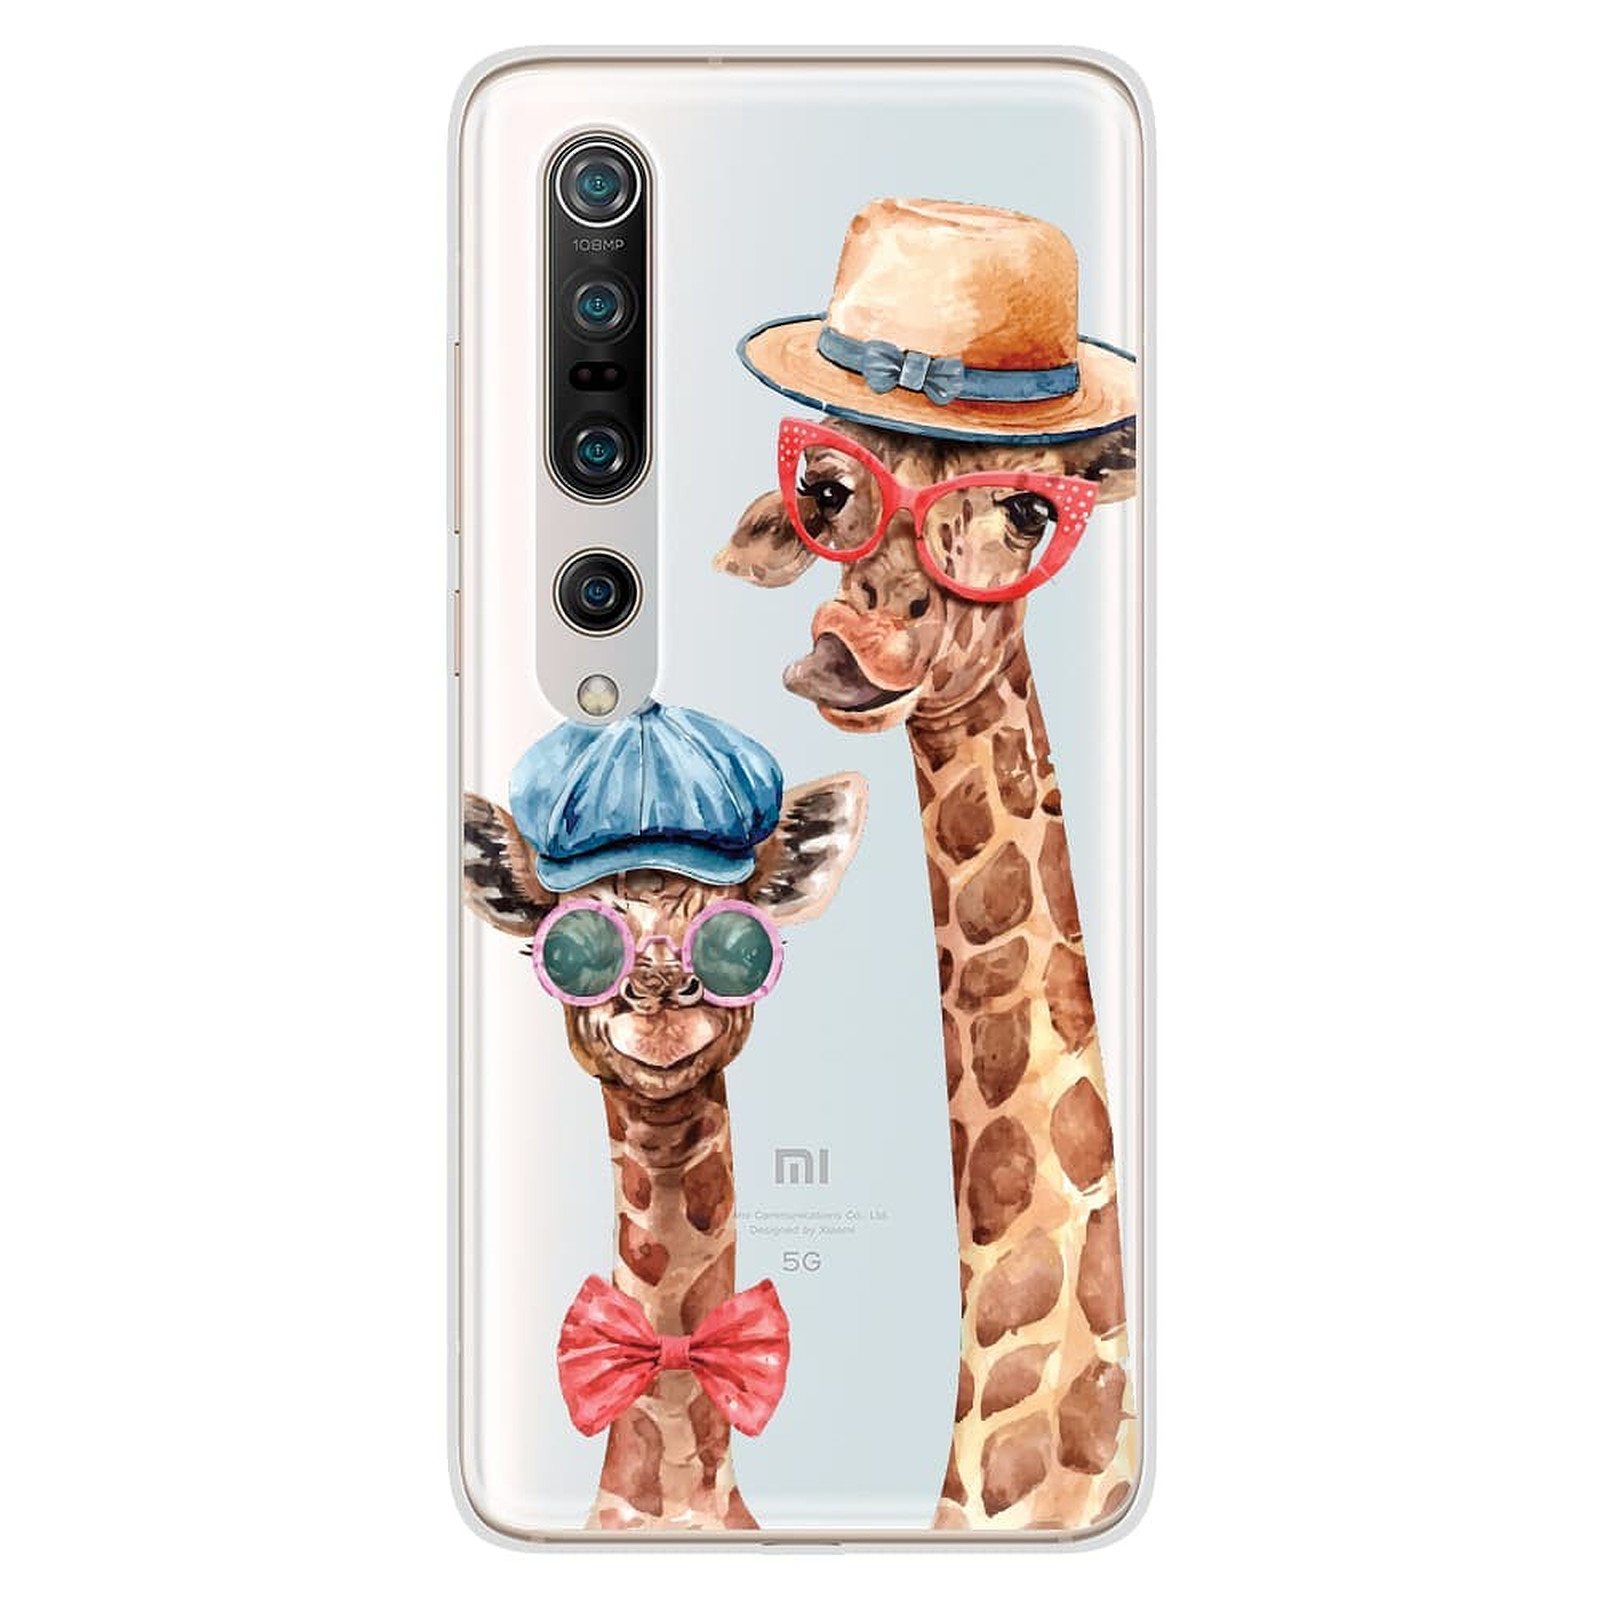 1001 Coques Coque silicone gel Xiaomi Mi 10 / Mi 10 pro motif Funny Girafe - Coque telephone 1001Coques